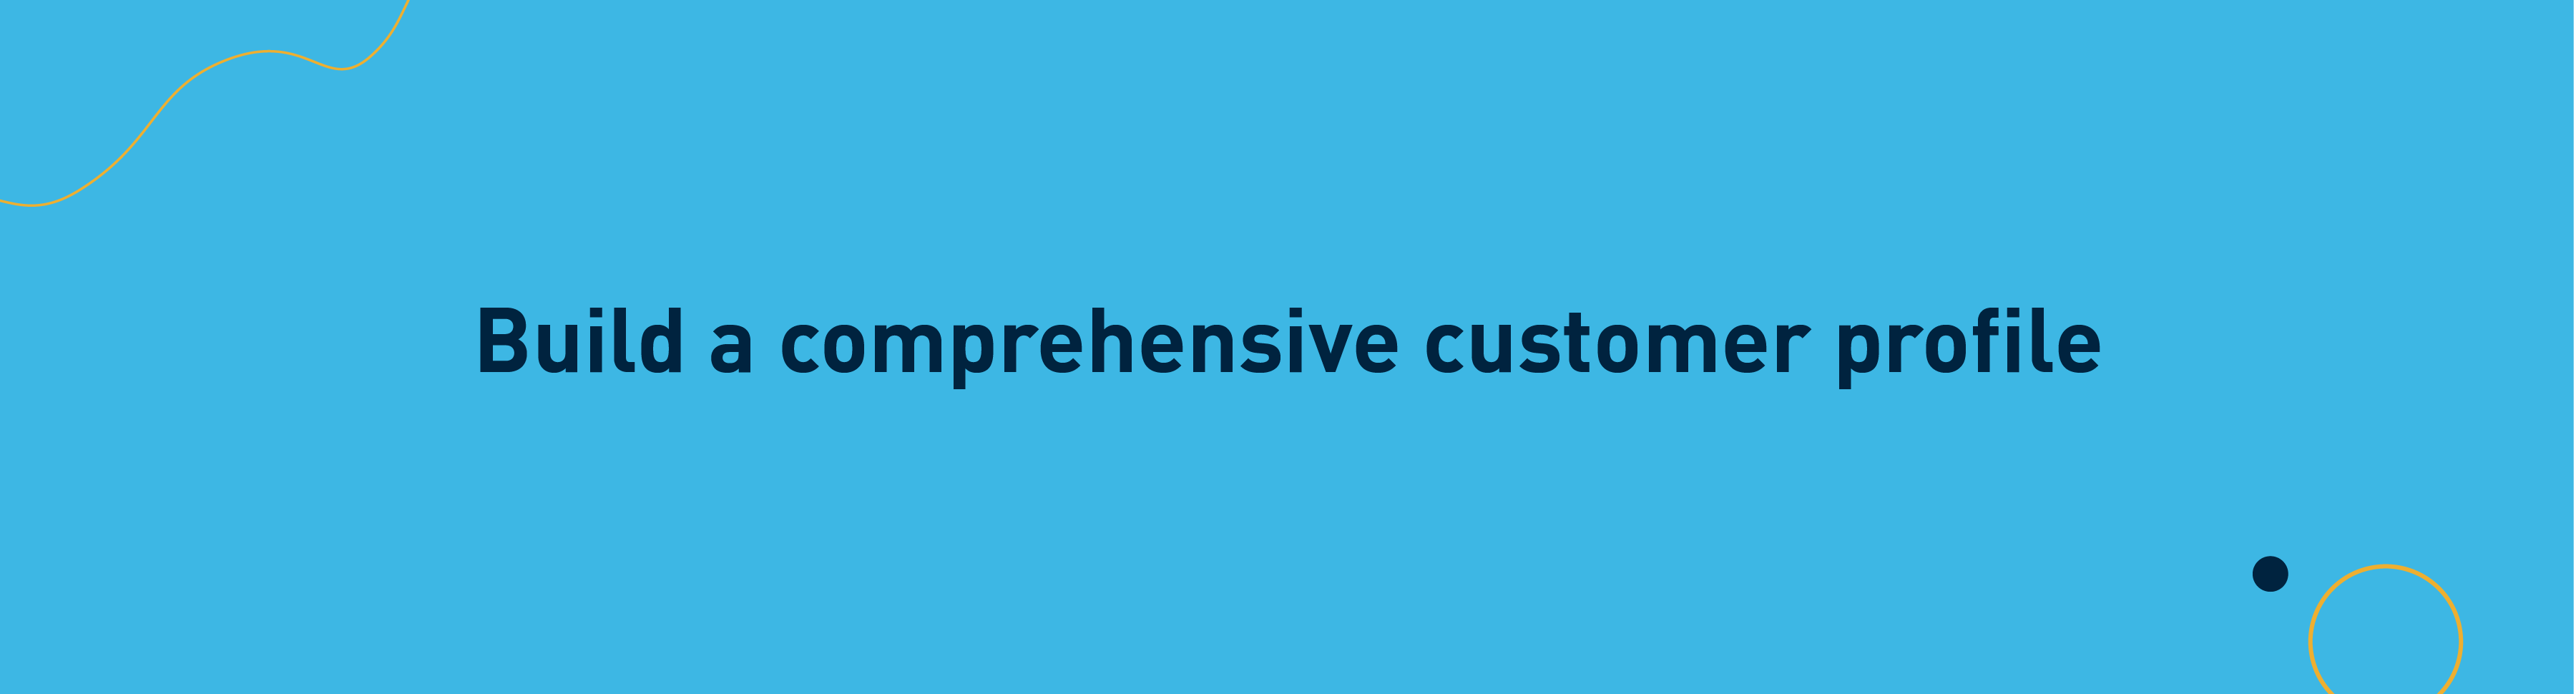 Build a comprehensive customer profile